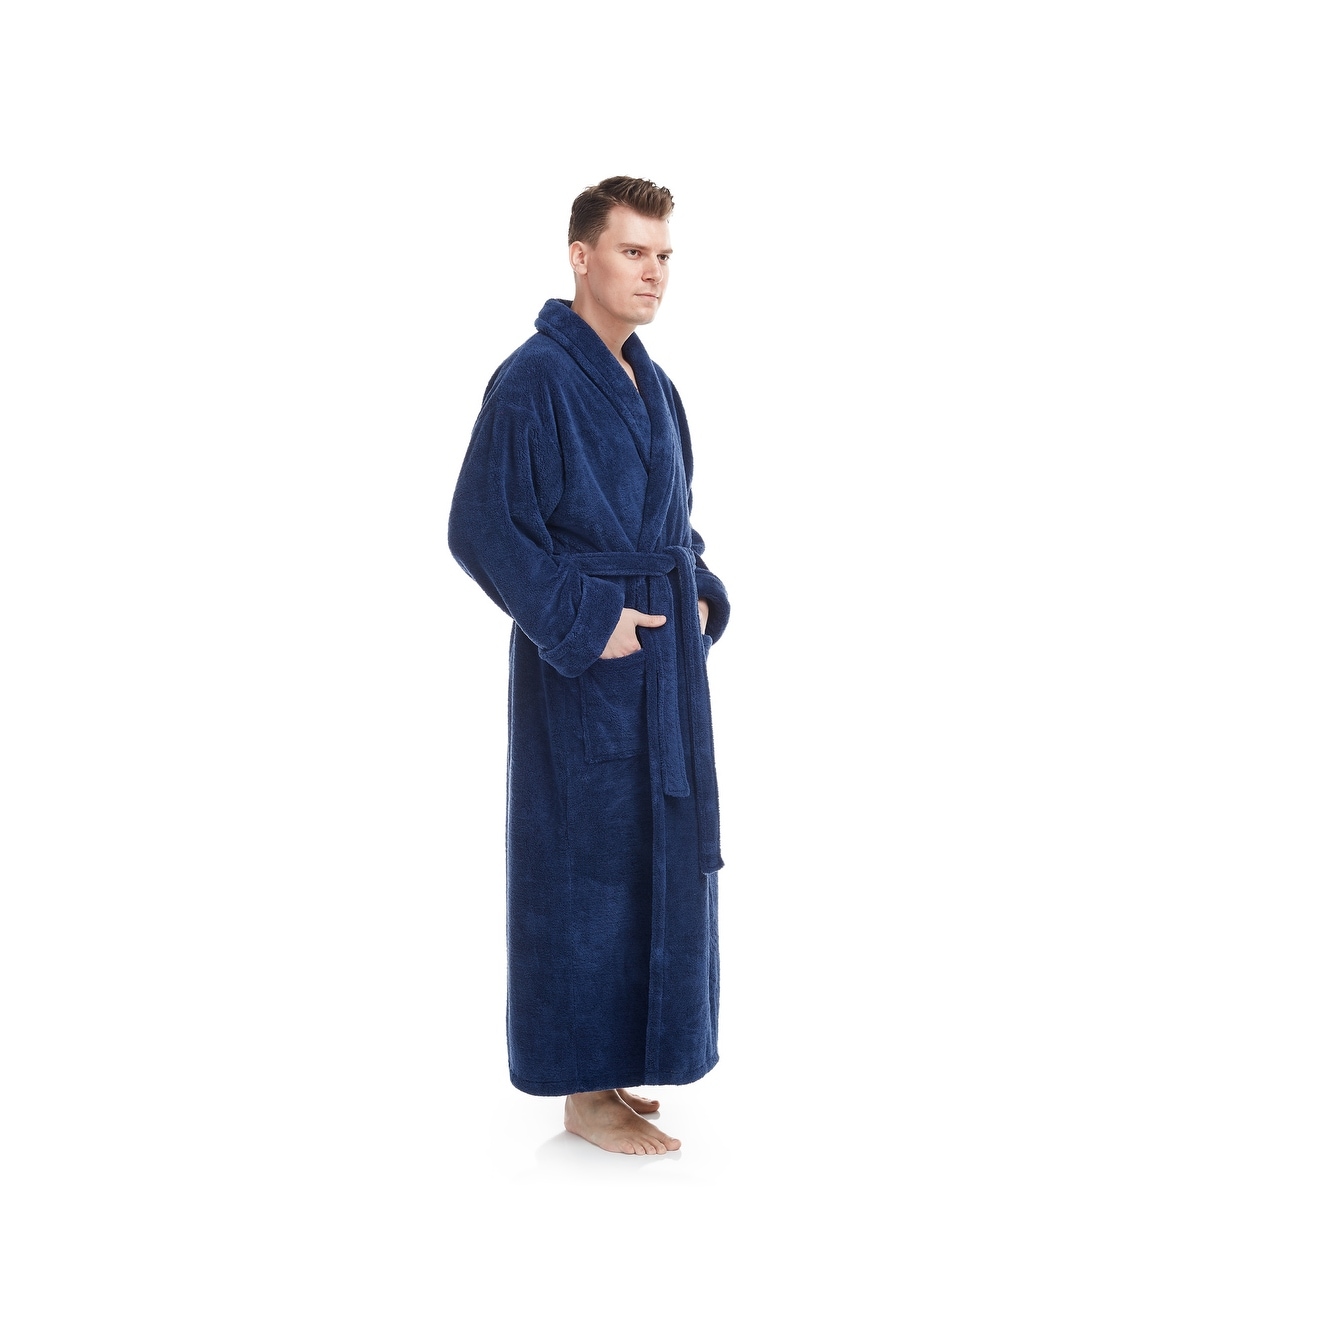 Shiusina Men's Winter Plush Lengthened Shawl Bathrobe Home Clothes